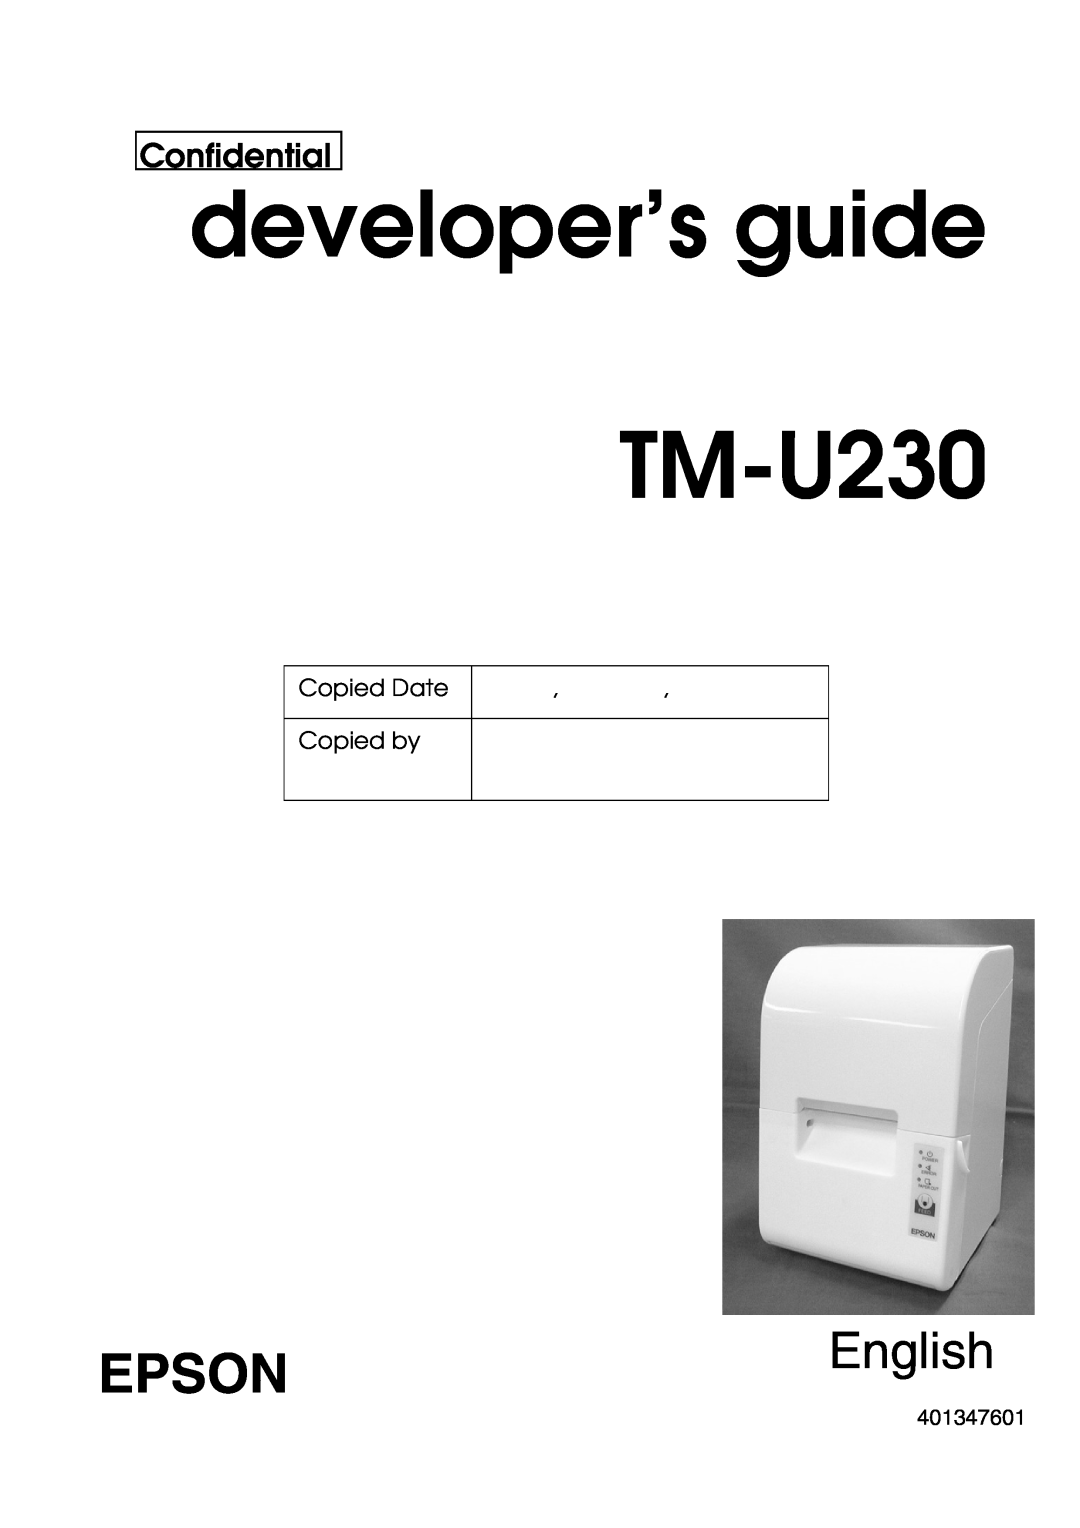 Epson manual Epson, Confidential, developer’s guide TM-U230, English, Copied Date, Copied by, 401347601 